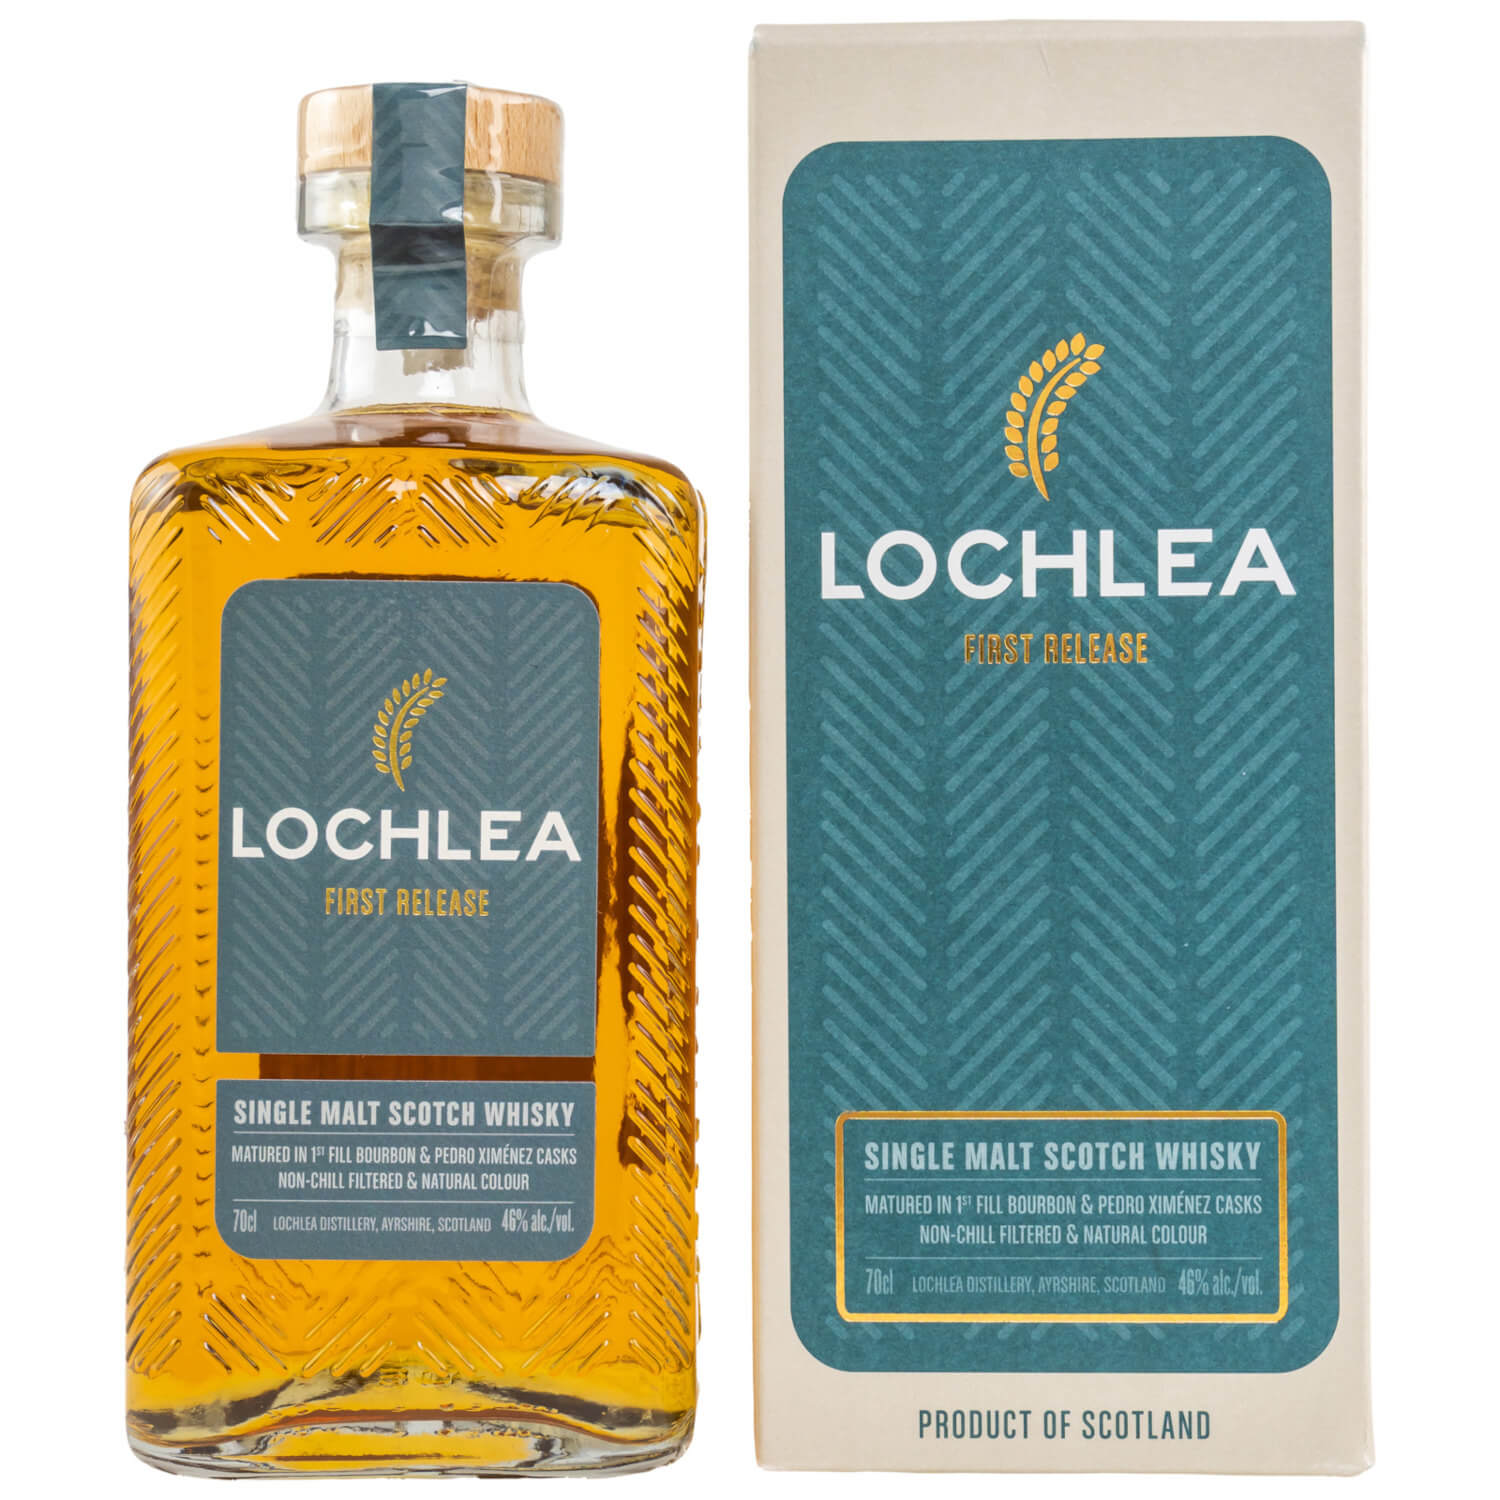 Lochlea Whisky rechteckige Flasche mit Verpackung